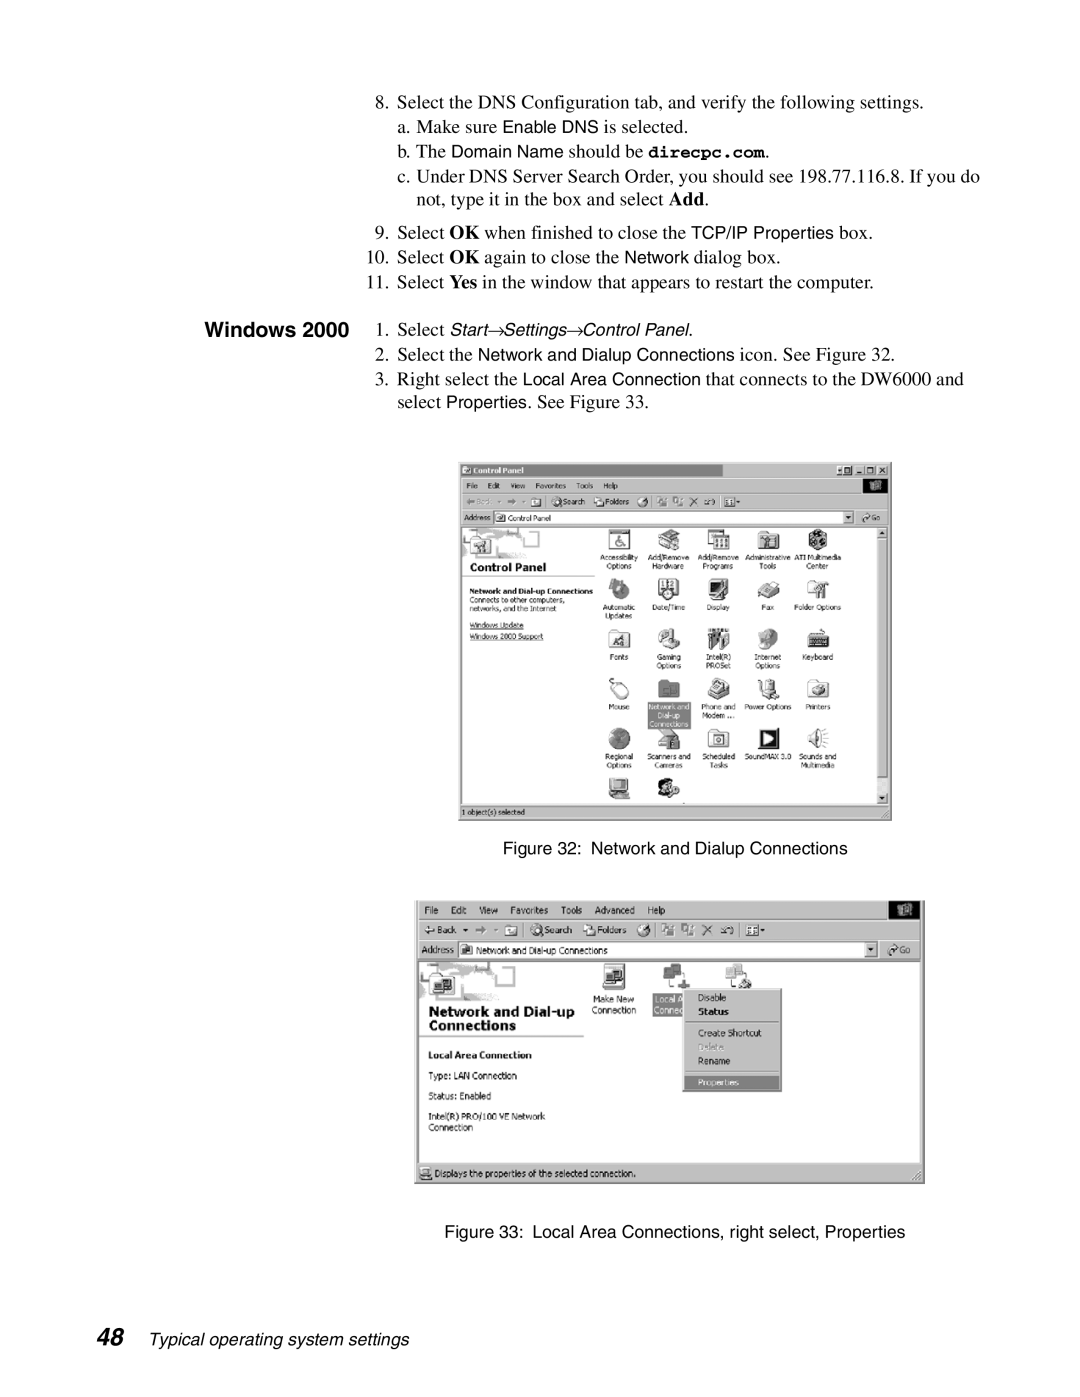 Hughes DW6000 manual Windows 2000 1. Select Start→Settings→Control Panel 